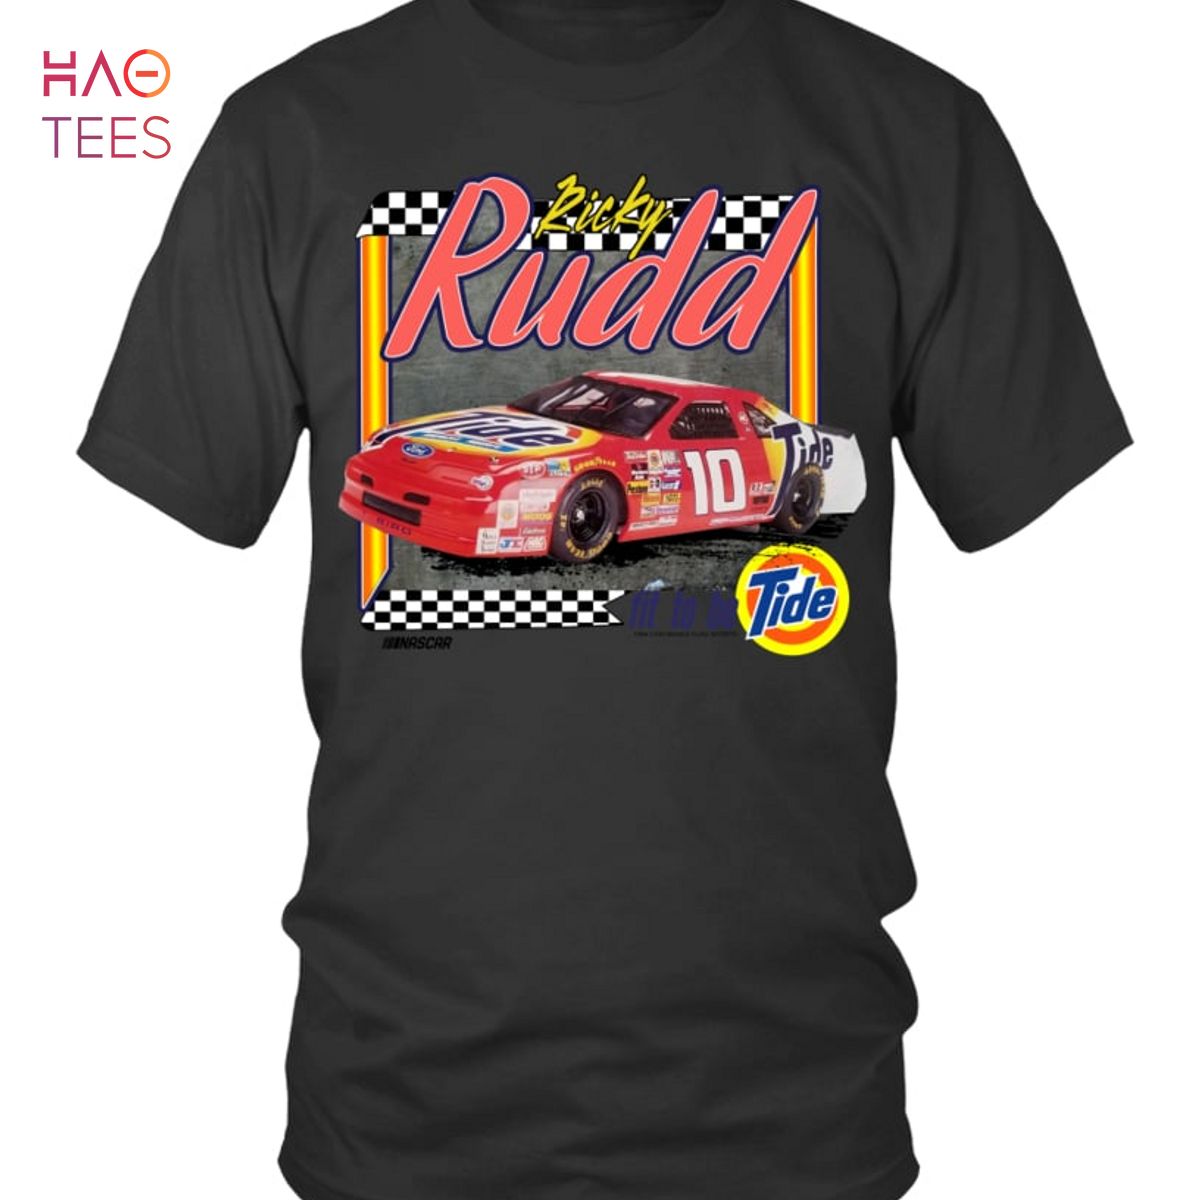 Ricky Rudd Racing Reference T-Shirt